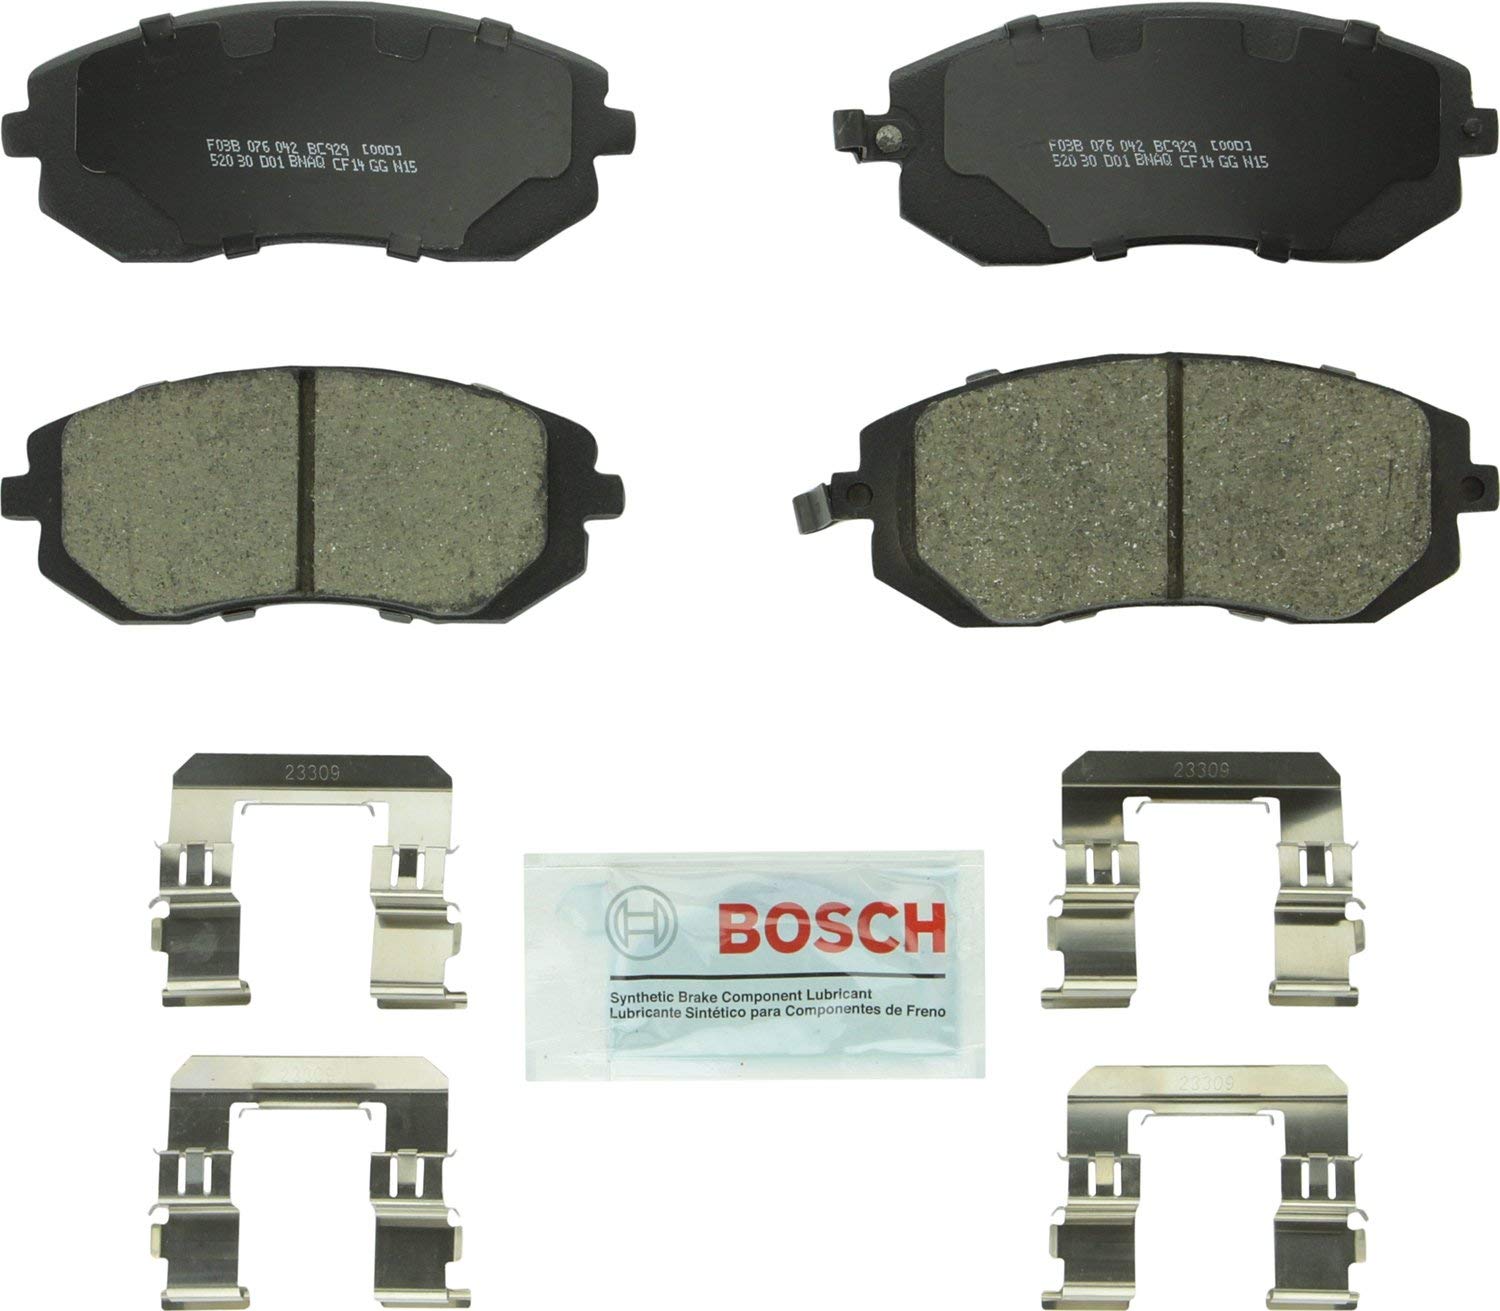 Bosch BC929 QuietCast Premium Ceramic Disc Brake Pad Set For: Saab 9-2X; Subaru Baja, Forester, Impreza, Legacy, Outback, WRX, Front